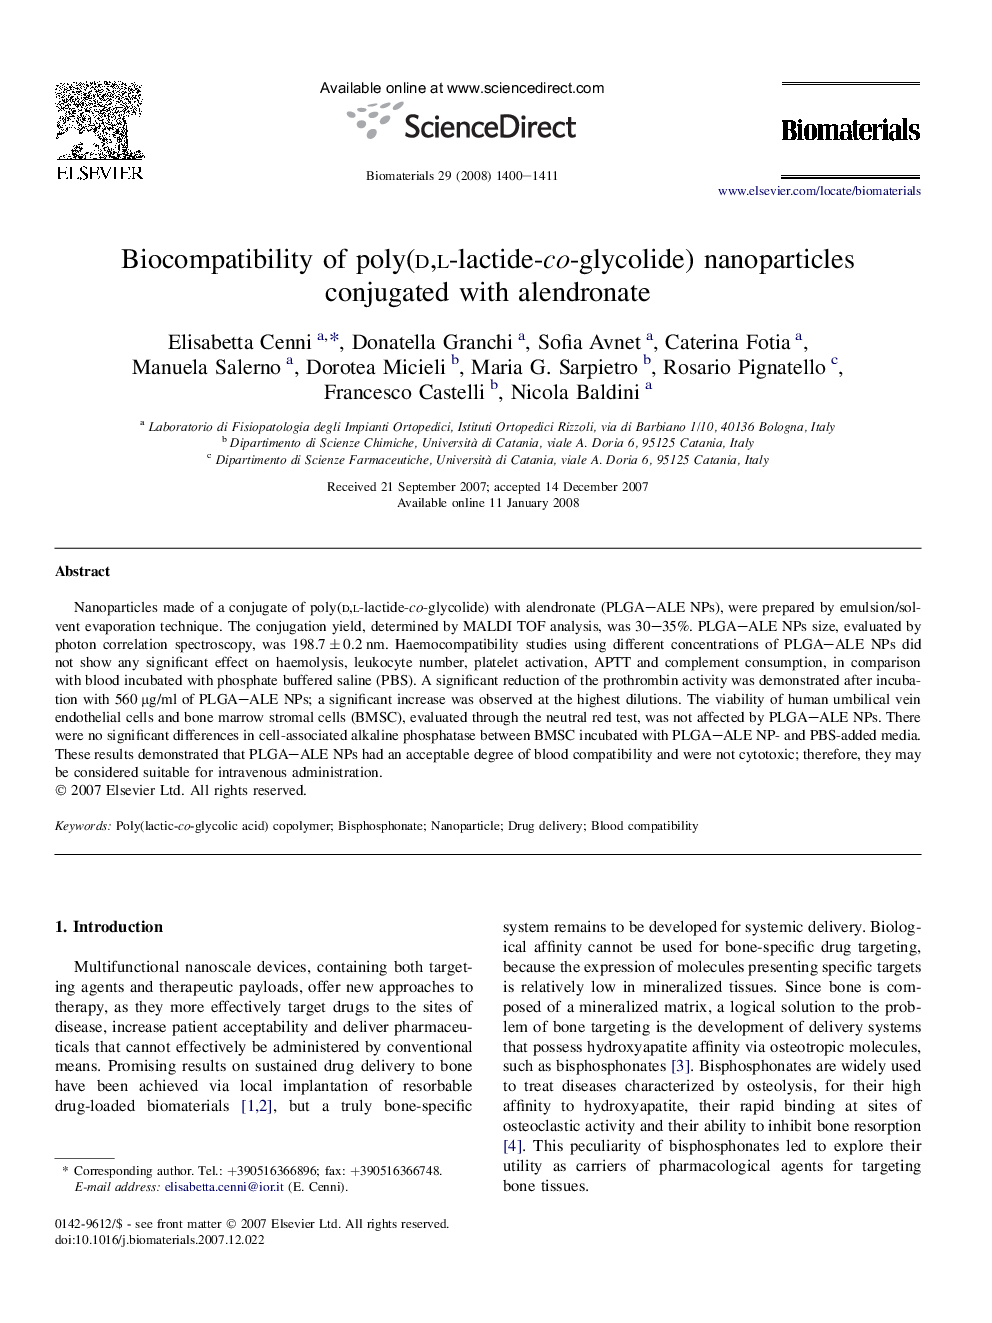 Biocompatibility of poly(d,l-lactide-co-glycolide) nanoparticles conjugated with alendronate